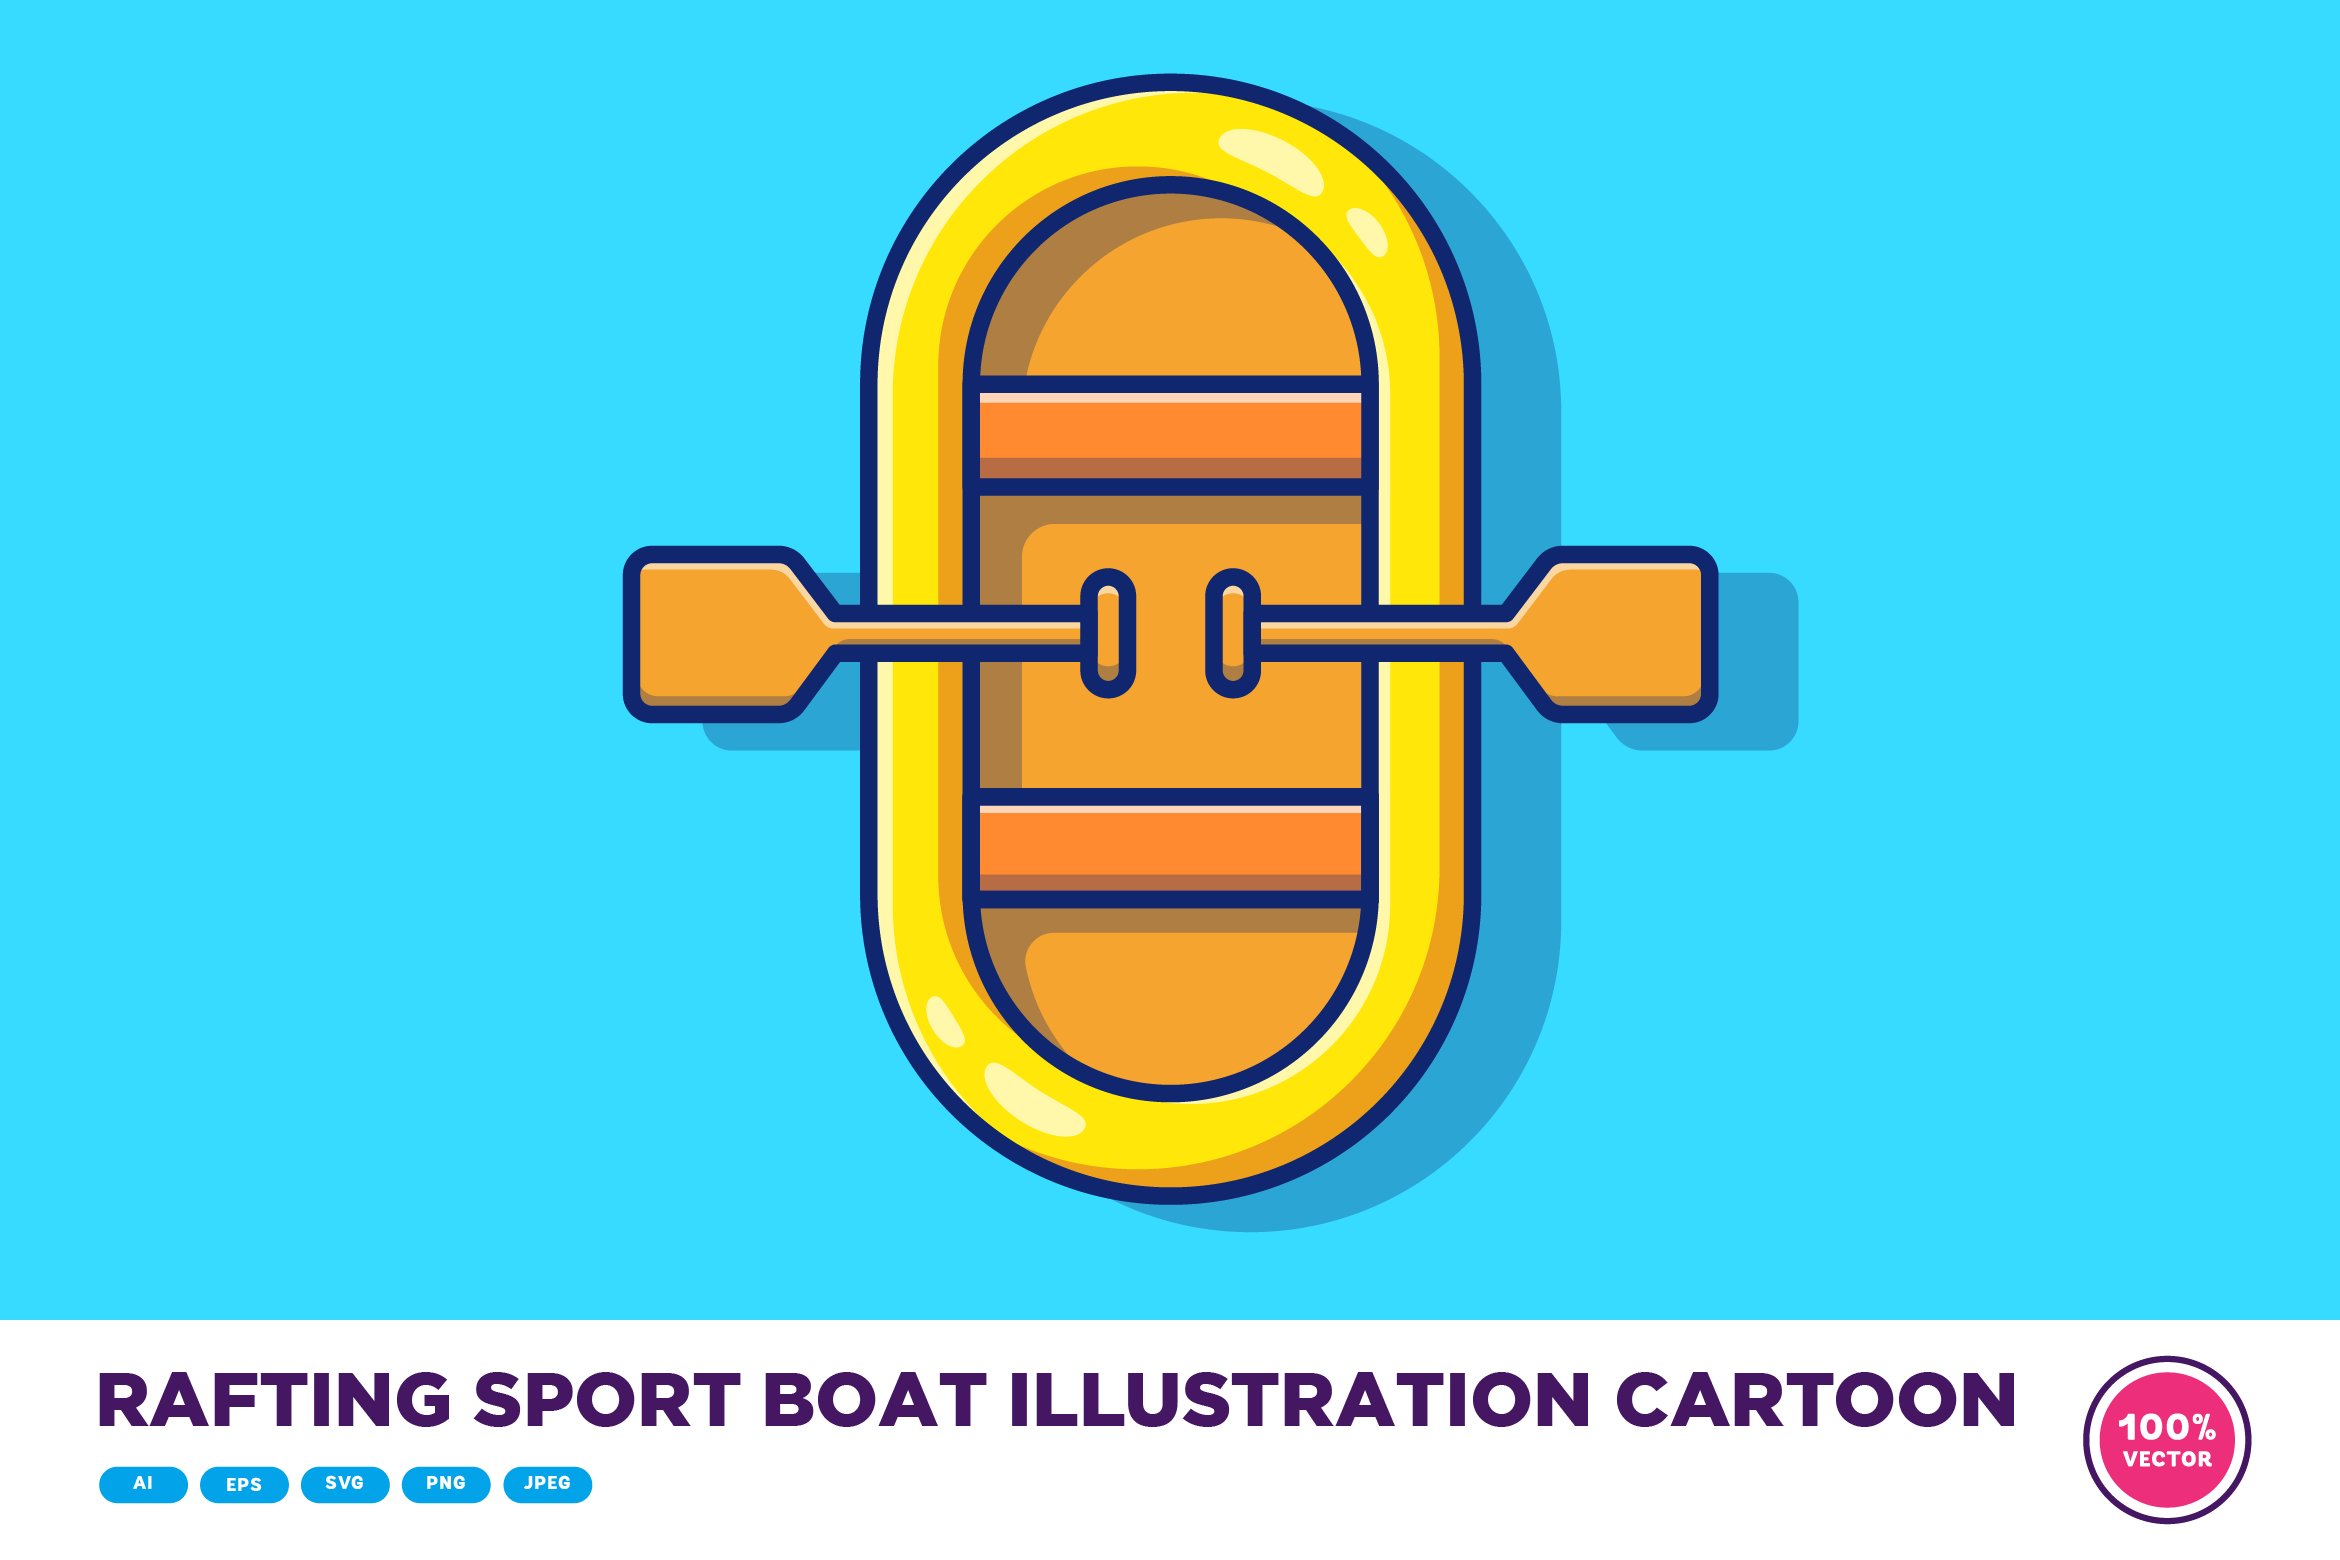 Rafting Sport Boat Illustration cover image.